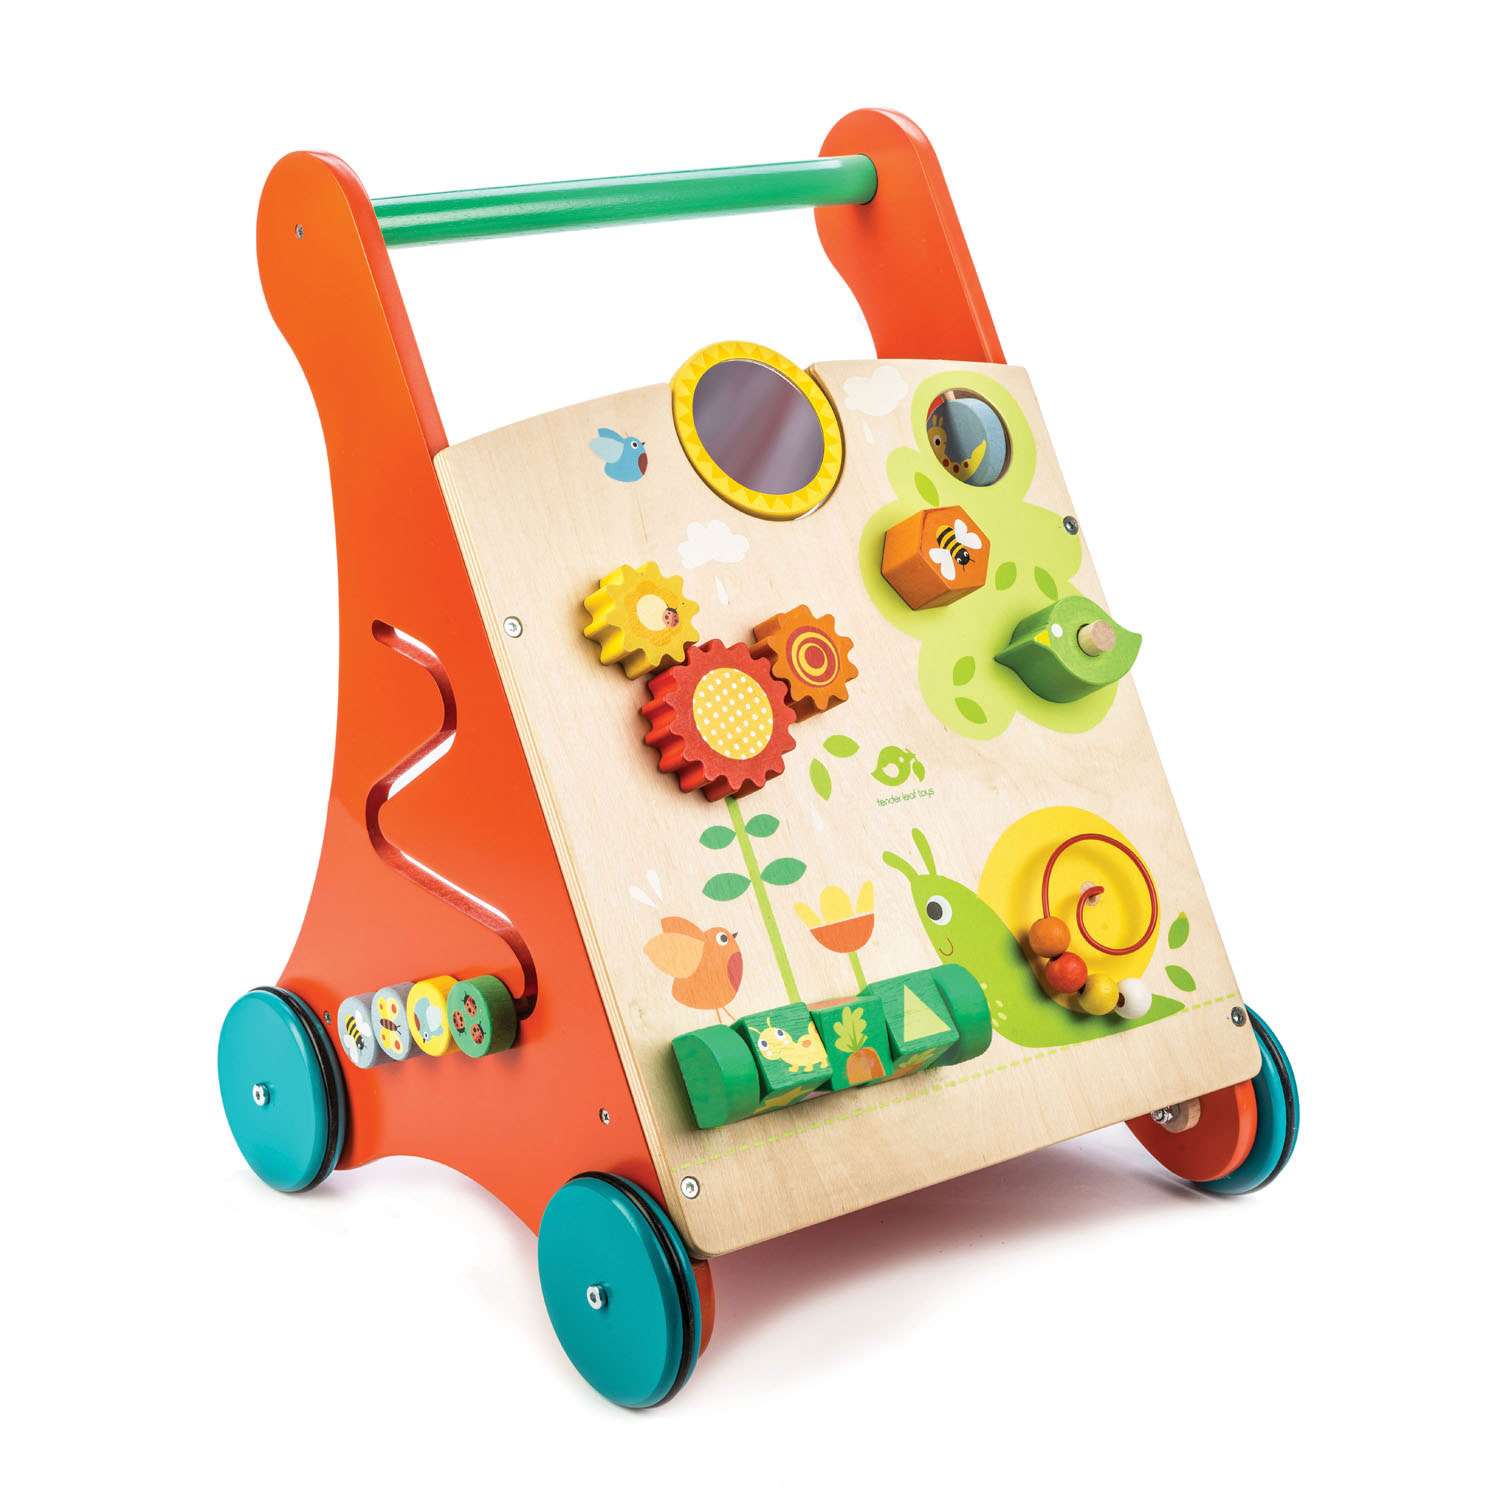 Tender Leaf Toys ของเล่นไม้ ของเล่นเด็ก รถเข็นฝึกเดินพร้อมกิจกรรม Baby Activity Walker